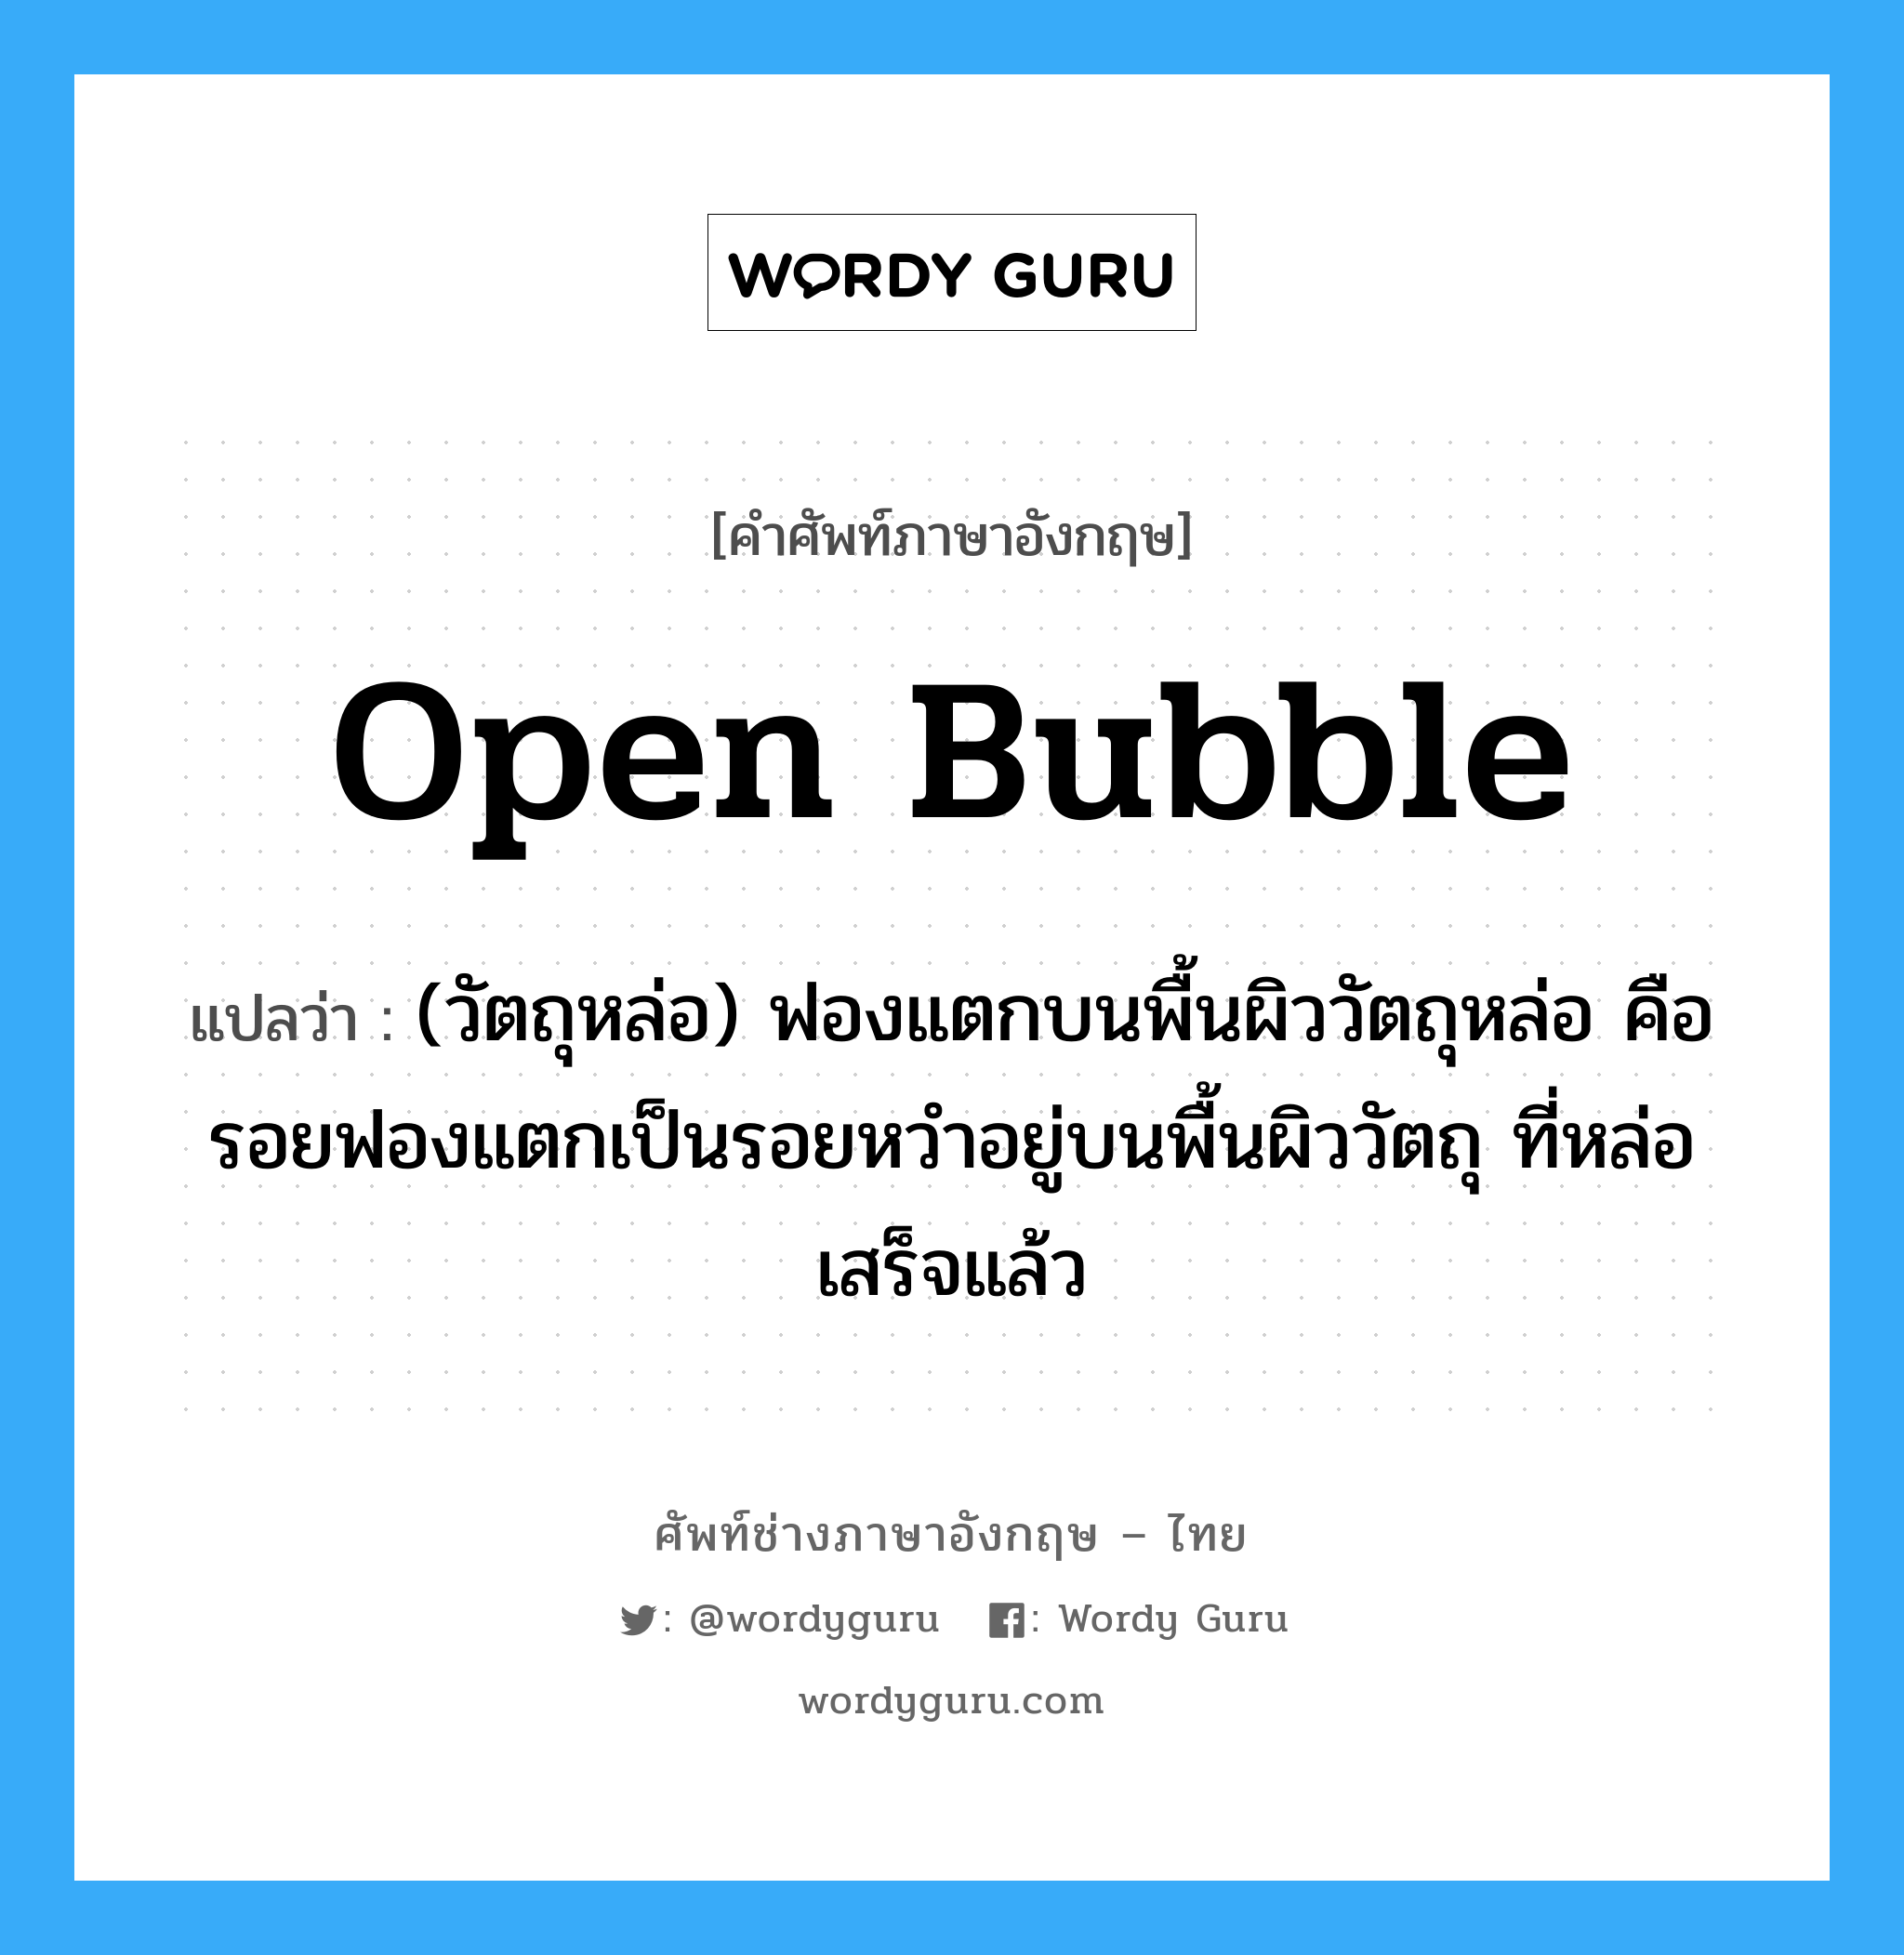 open bubble แปลว่า?, คำศัพท์ช่างภาษาอังกฤษ - ไทย open bubble คำศัพท์ภาษาอังกฤษ open bubble แปลว่า (วัตถุหล่อ) ฟองแตกบนพื้นผิววัตถุหล่อ คือรอยฟองแตกเป็นรอยหวำอยู่บนพื้นผิววัตถุ ที่หล่อเสร็จแล้ว